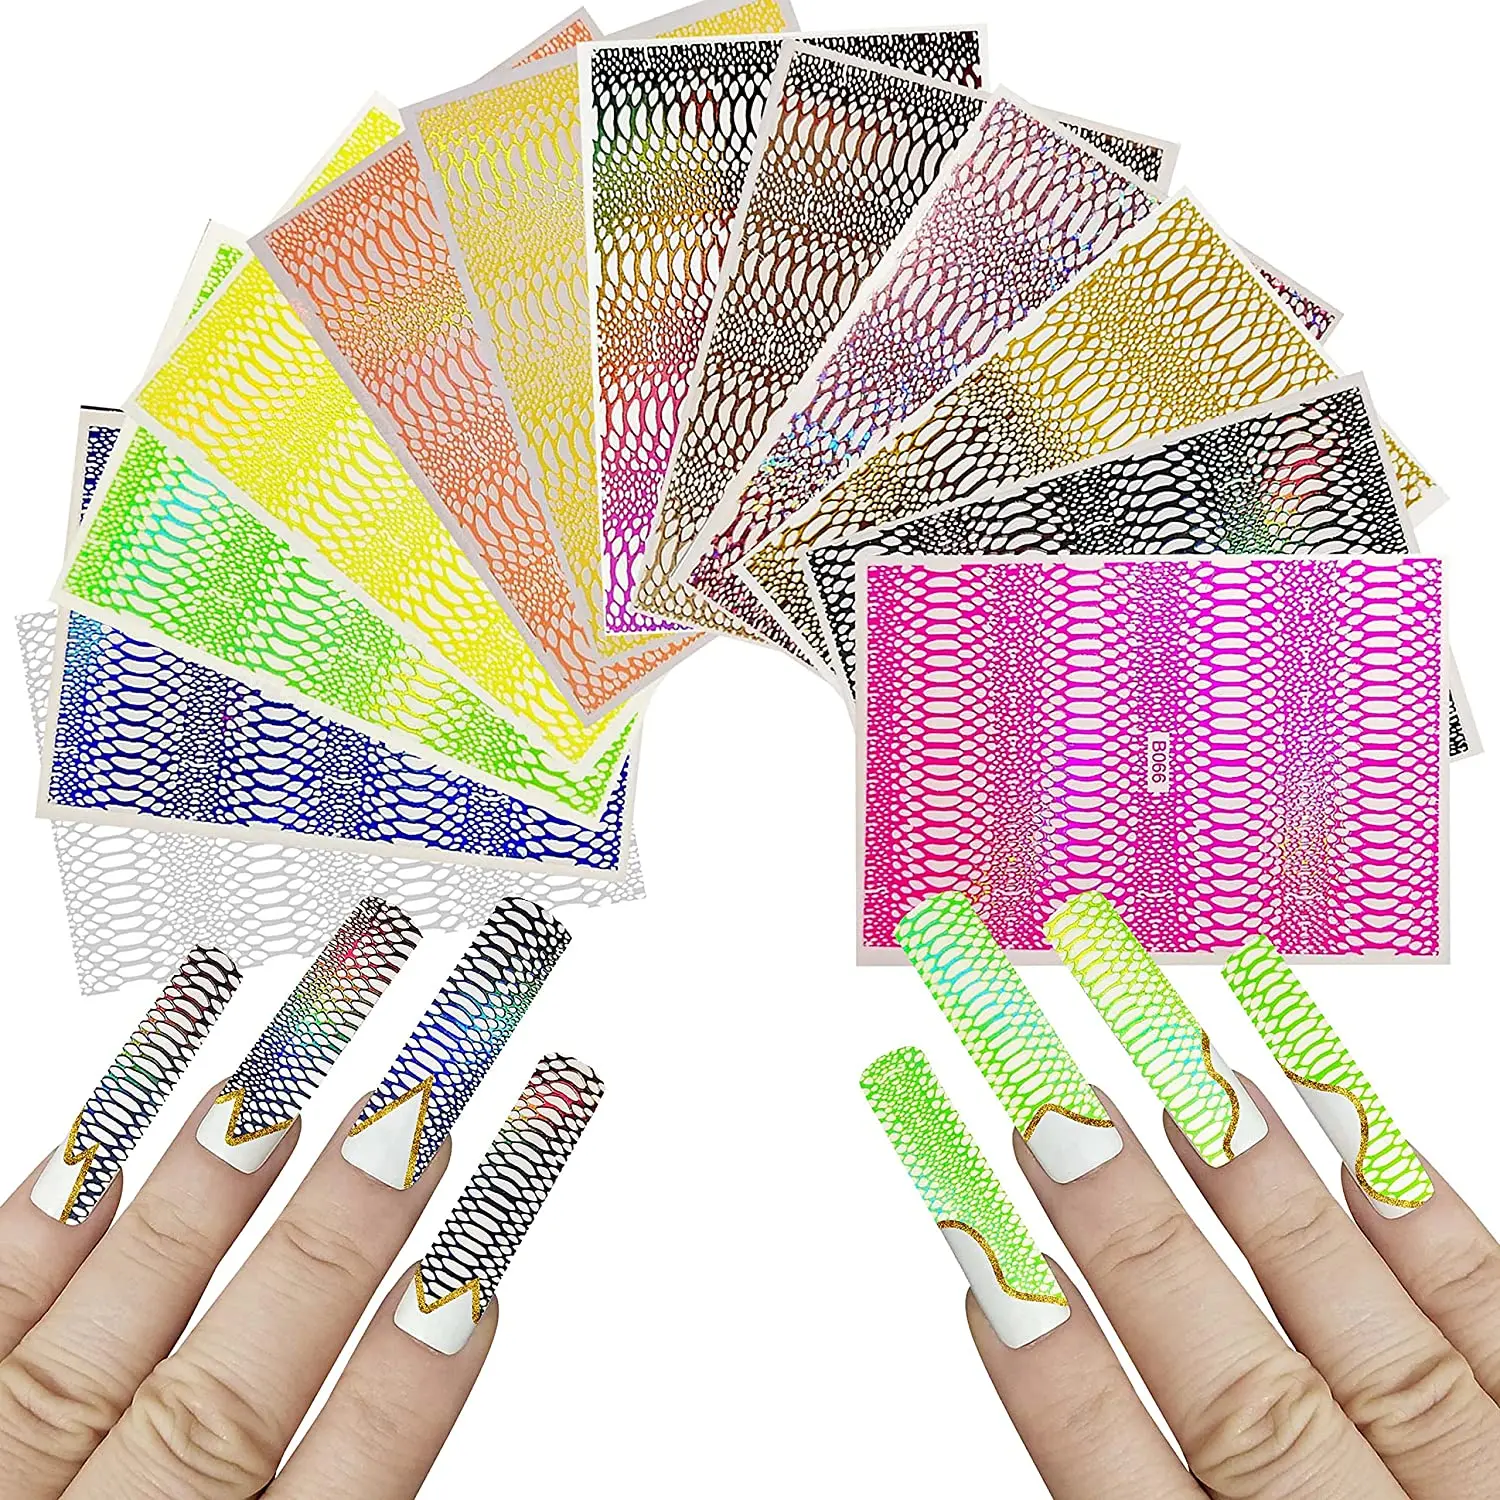 

4Sheet/Set SnakeSkin Tattoo-Iridescent Neon Water Transfer Sticker Nail,Snake-Skin Decorative Pattern Manicure Decal Sticker